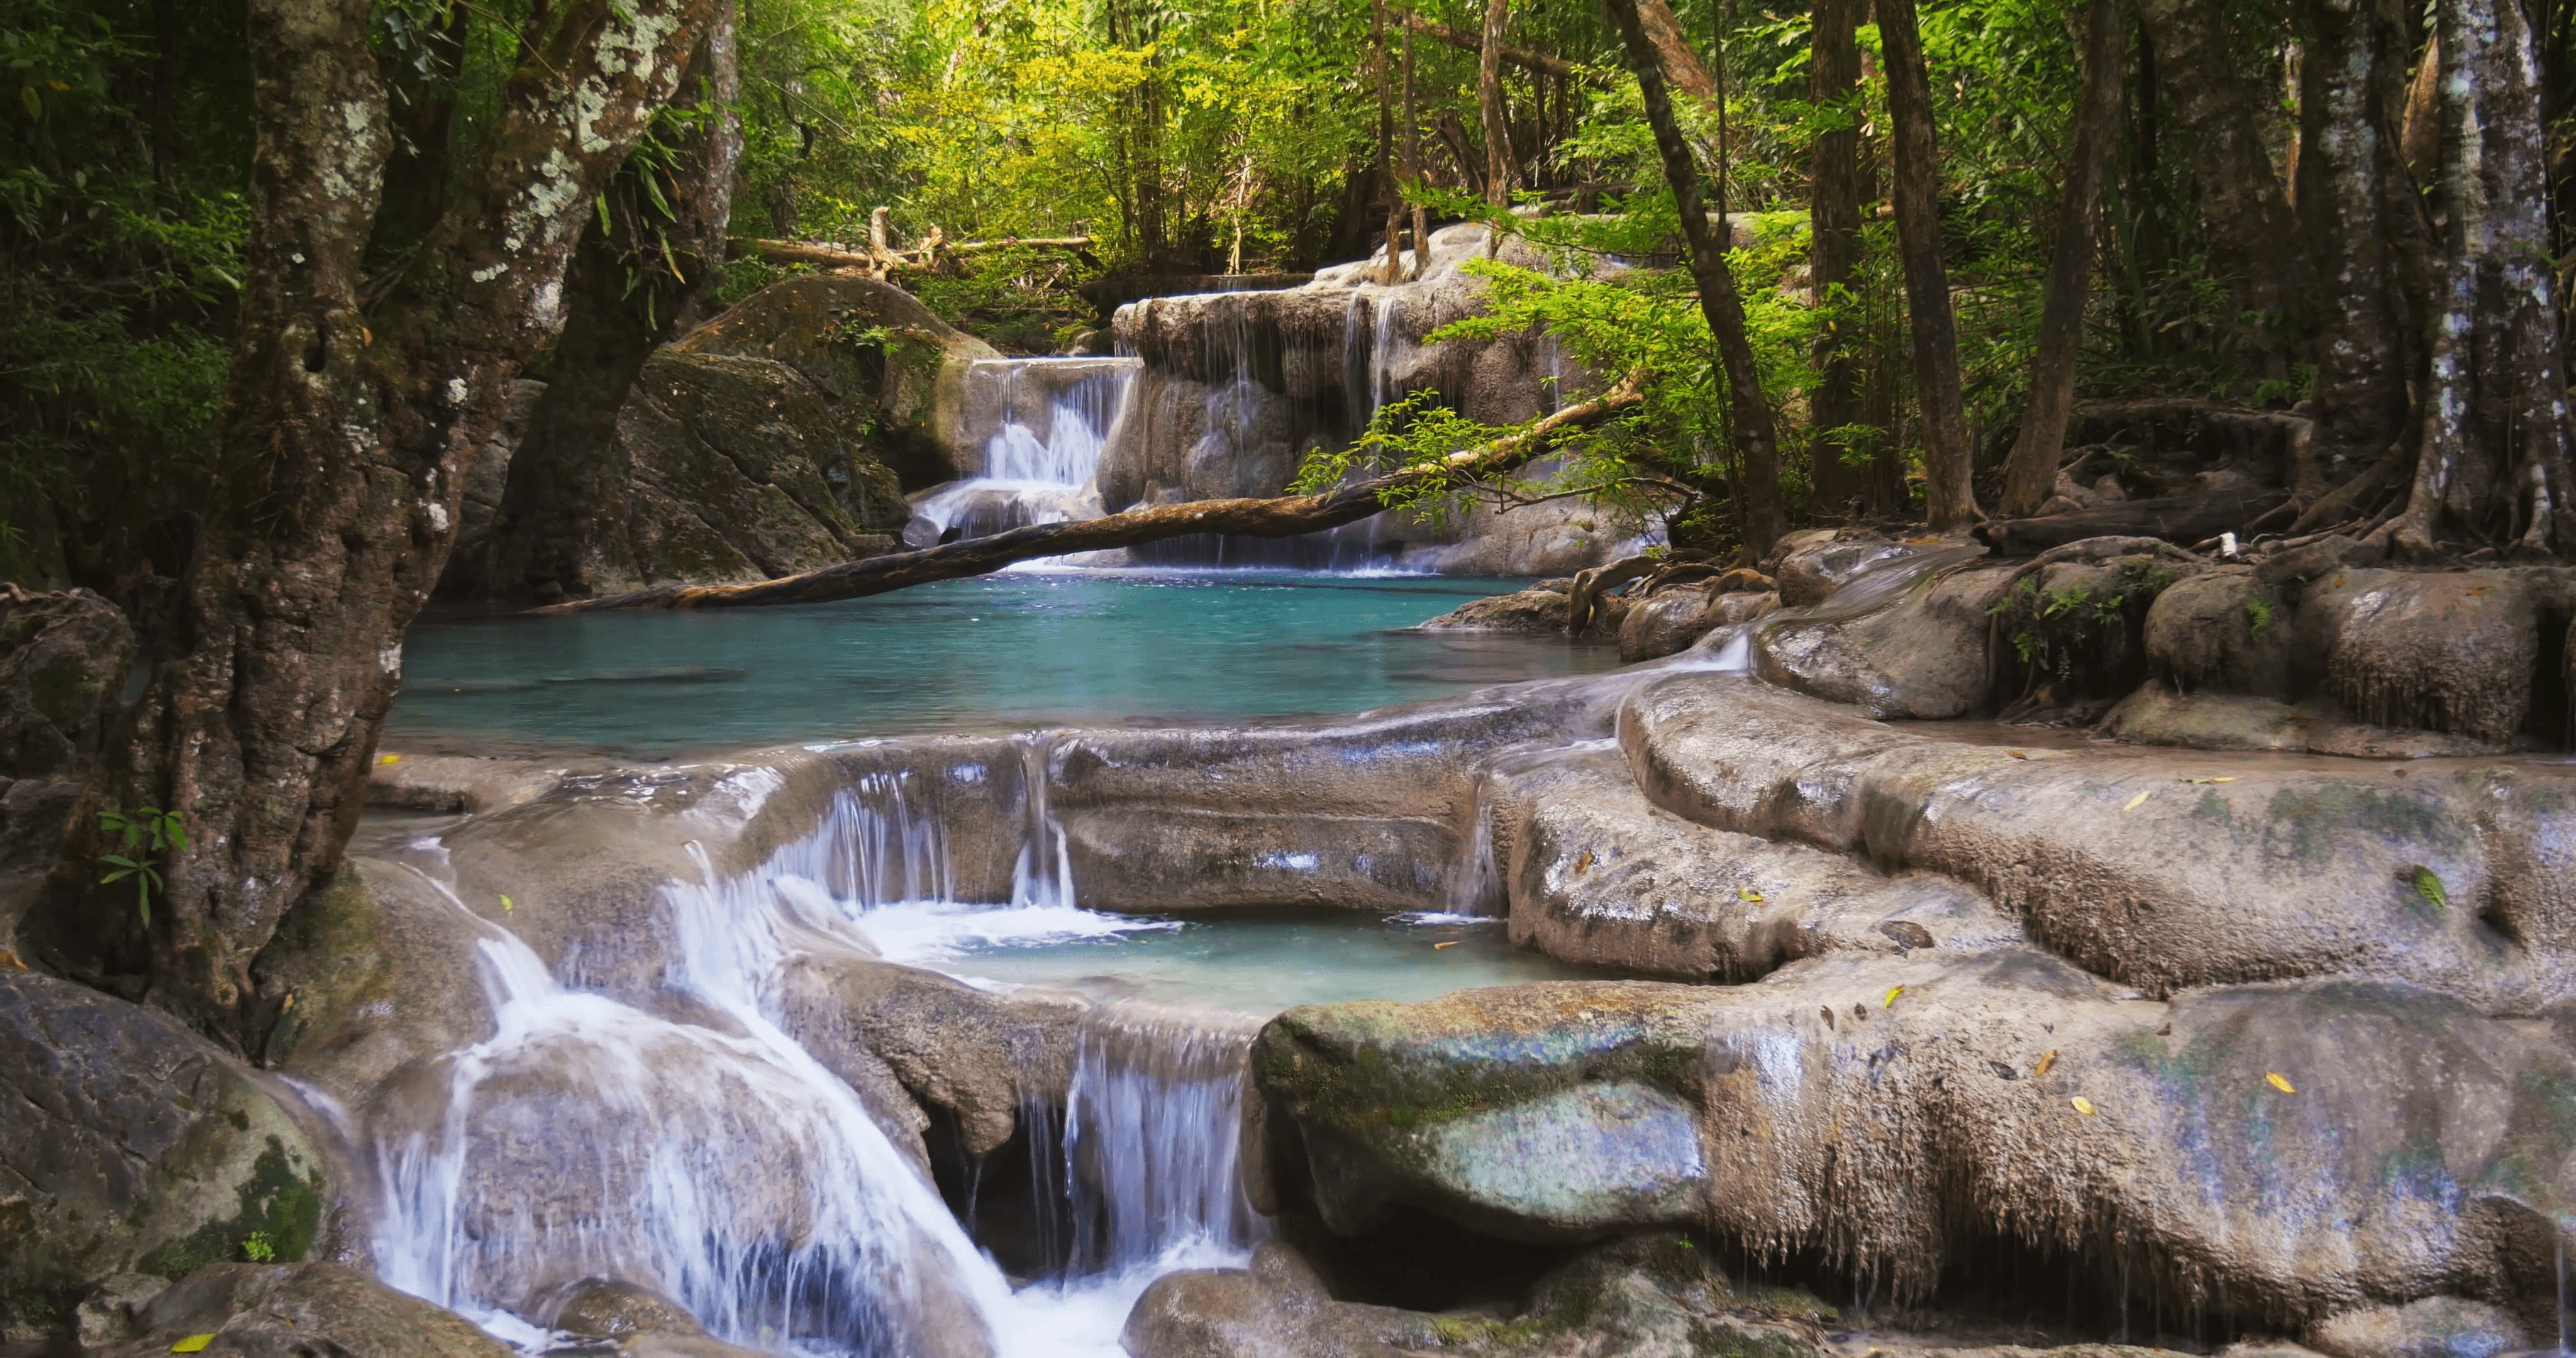 Tropical rainforest paradise background. Mountain river flows